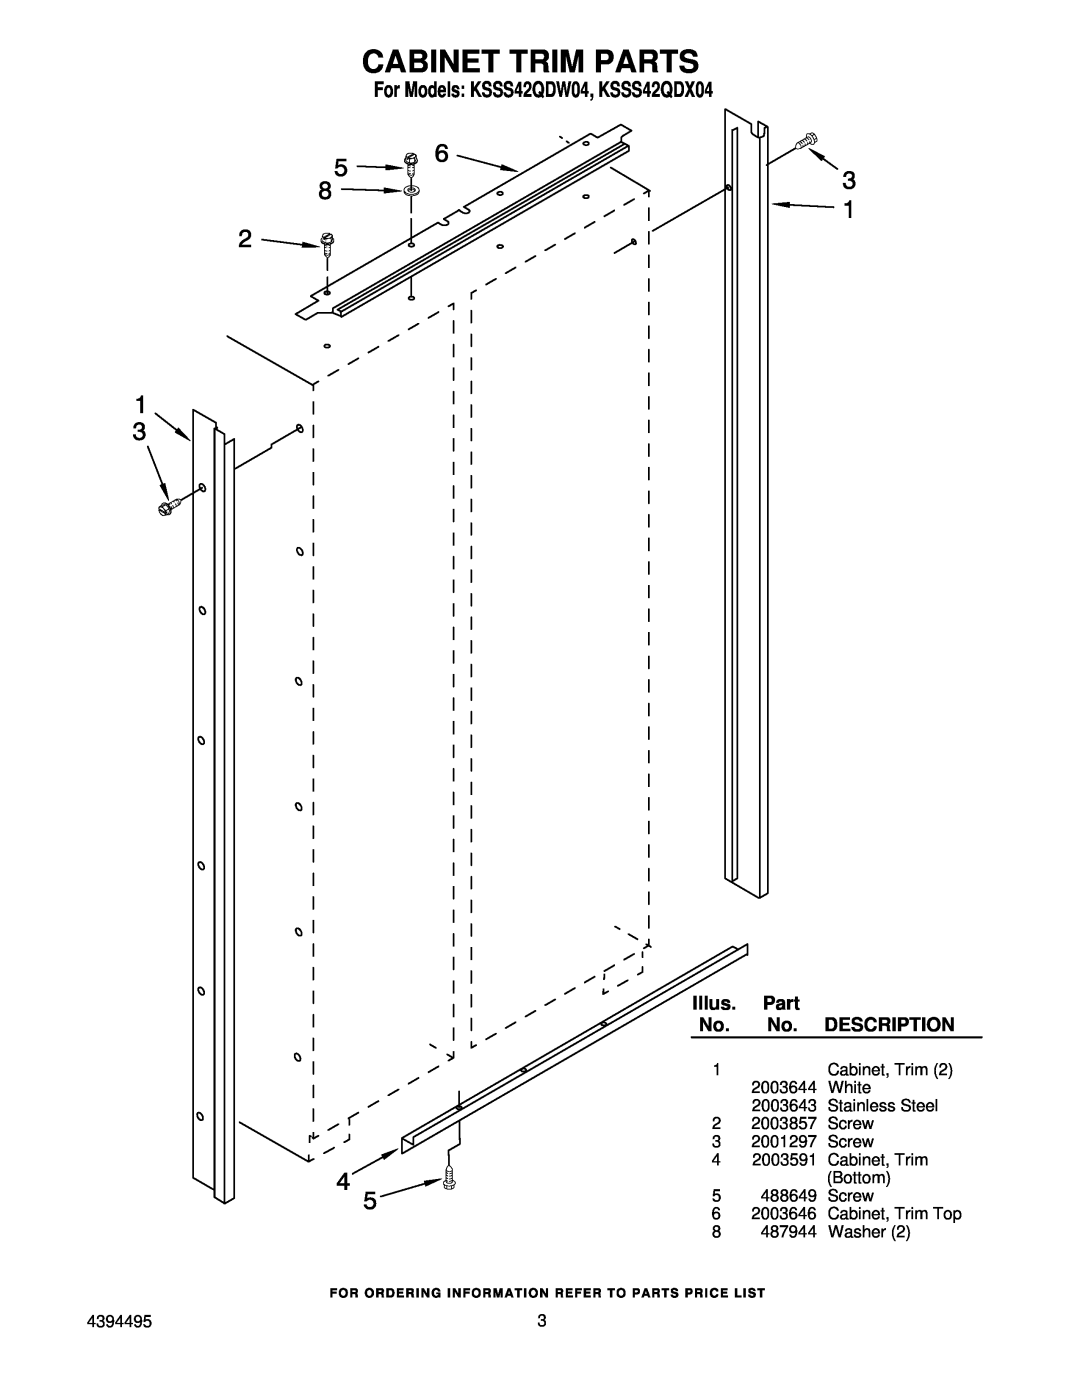 KitchenAid manual Cabinet Trim Parts, Illus, Description, For Models KSSS42QDW04, KSSS42QDX04 